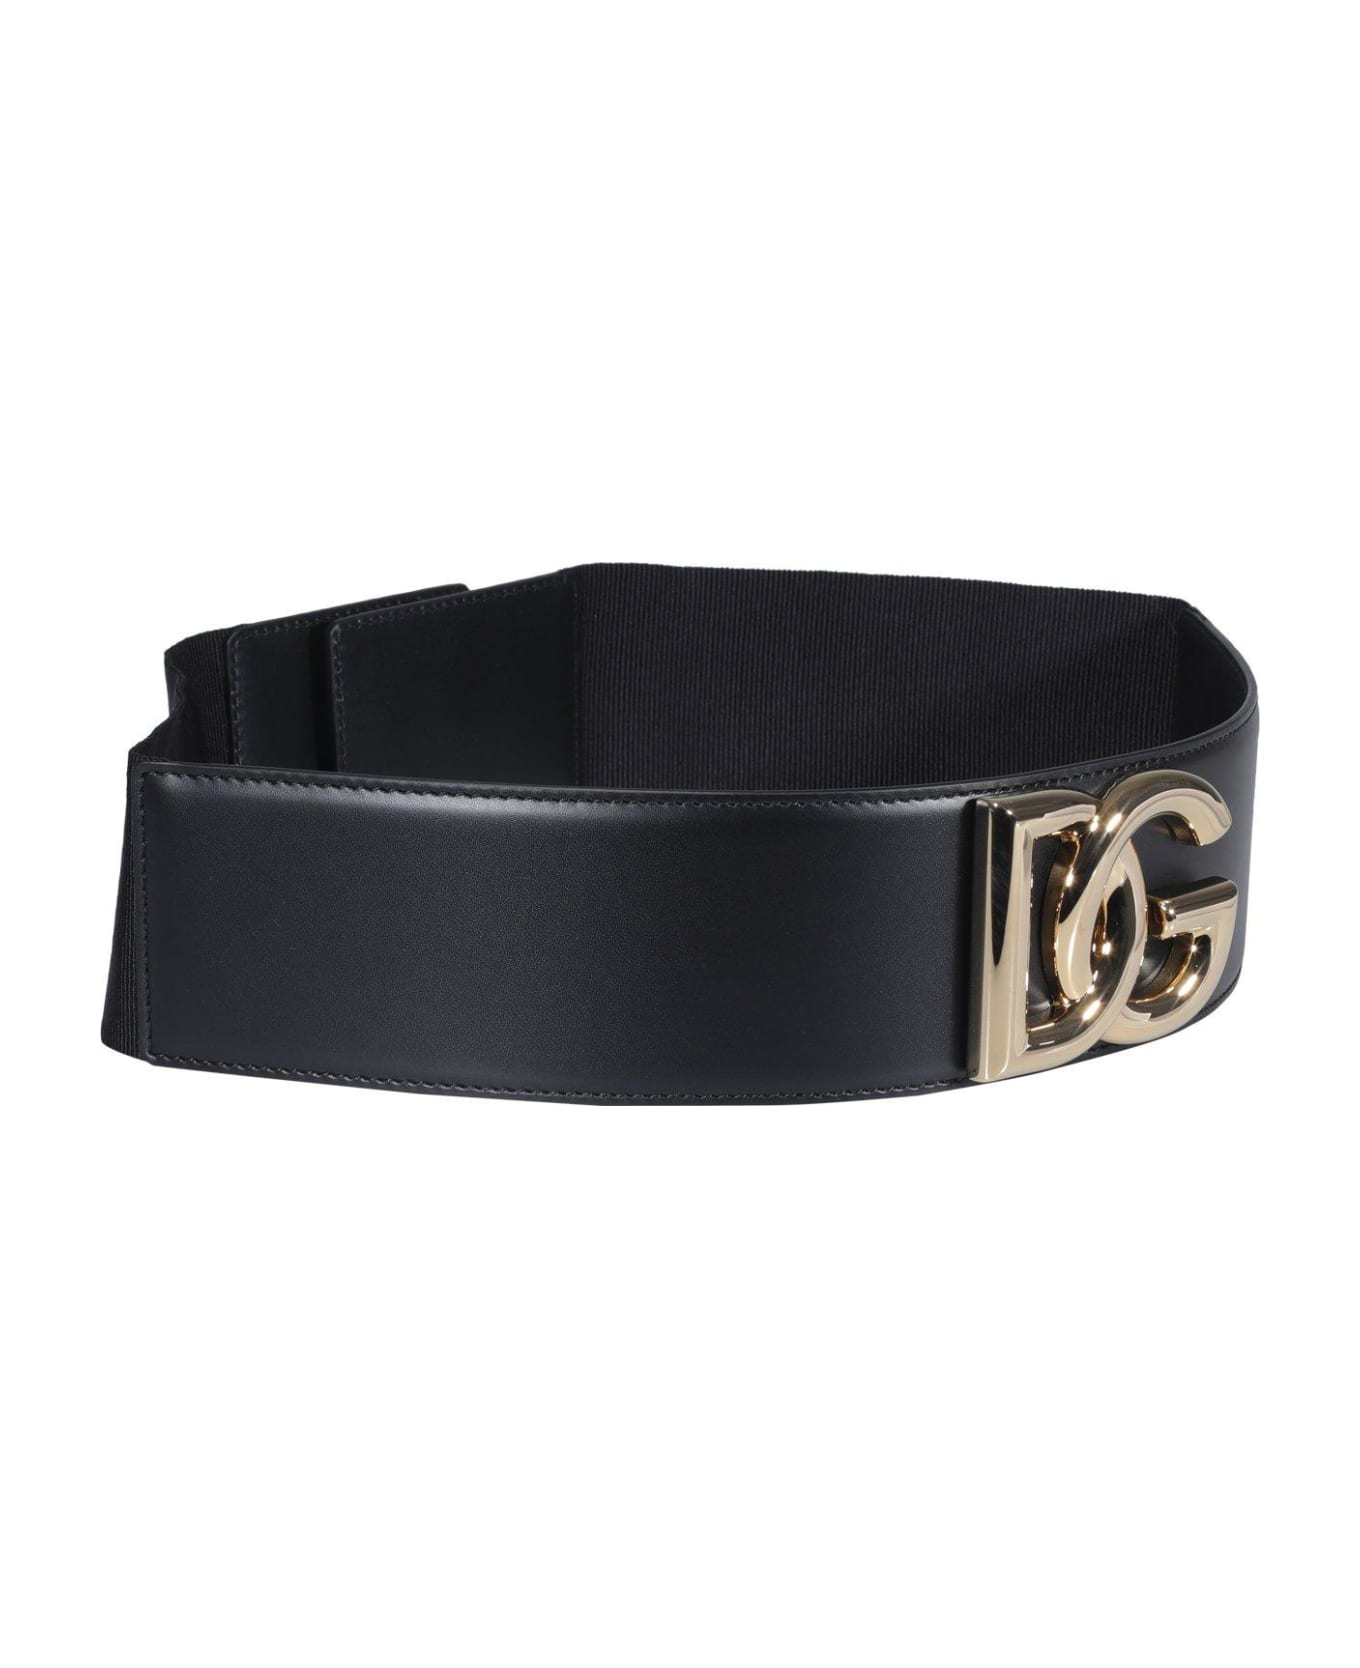 Dolce & Gabbana Dg Plaque Belt